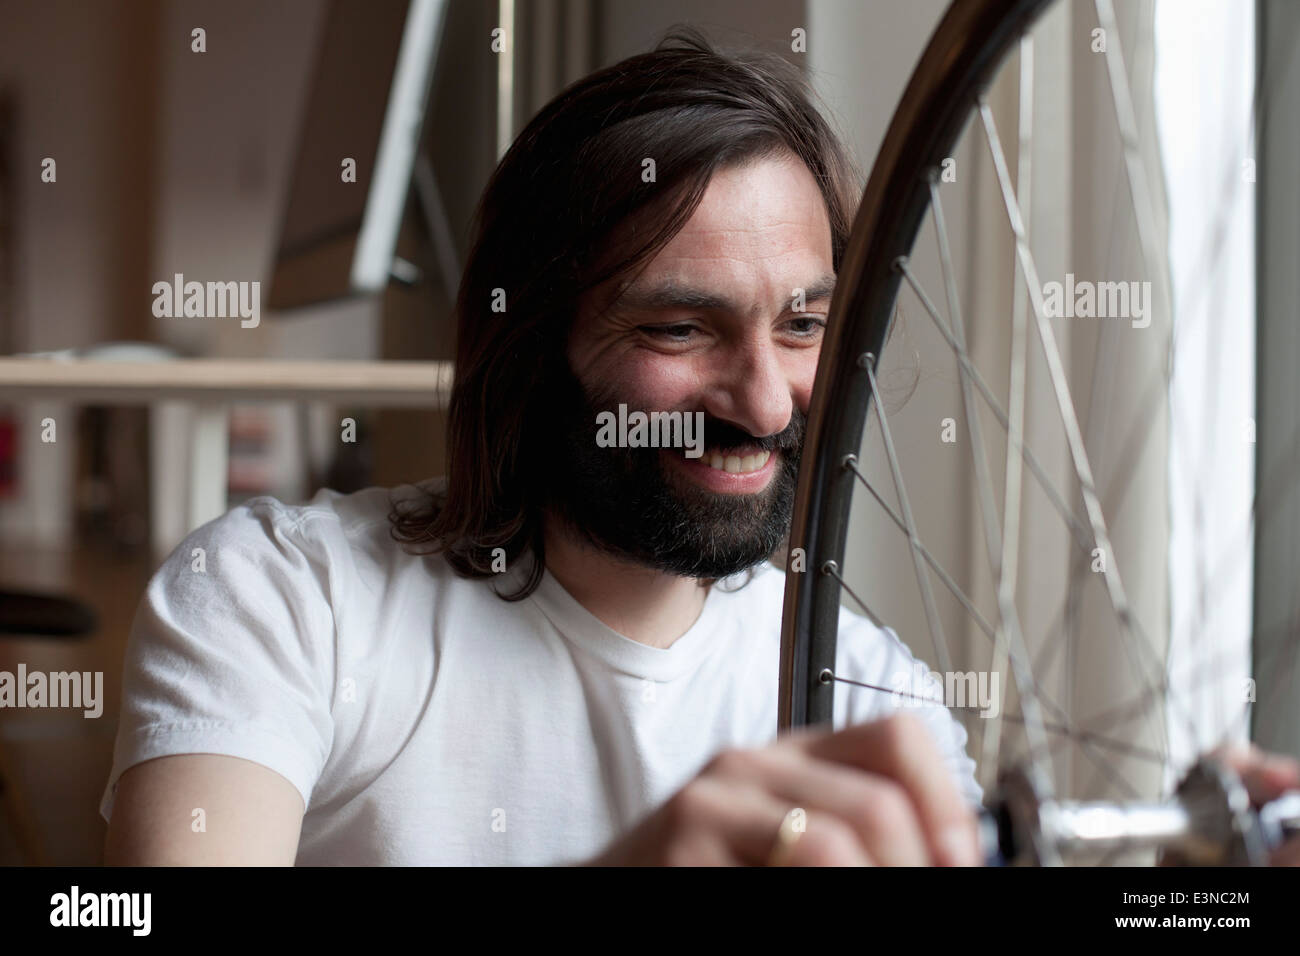 Smiling mid adult man repairing bicycle at home Stock Photo